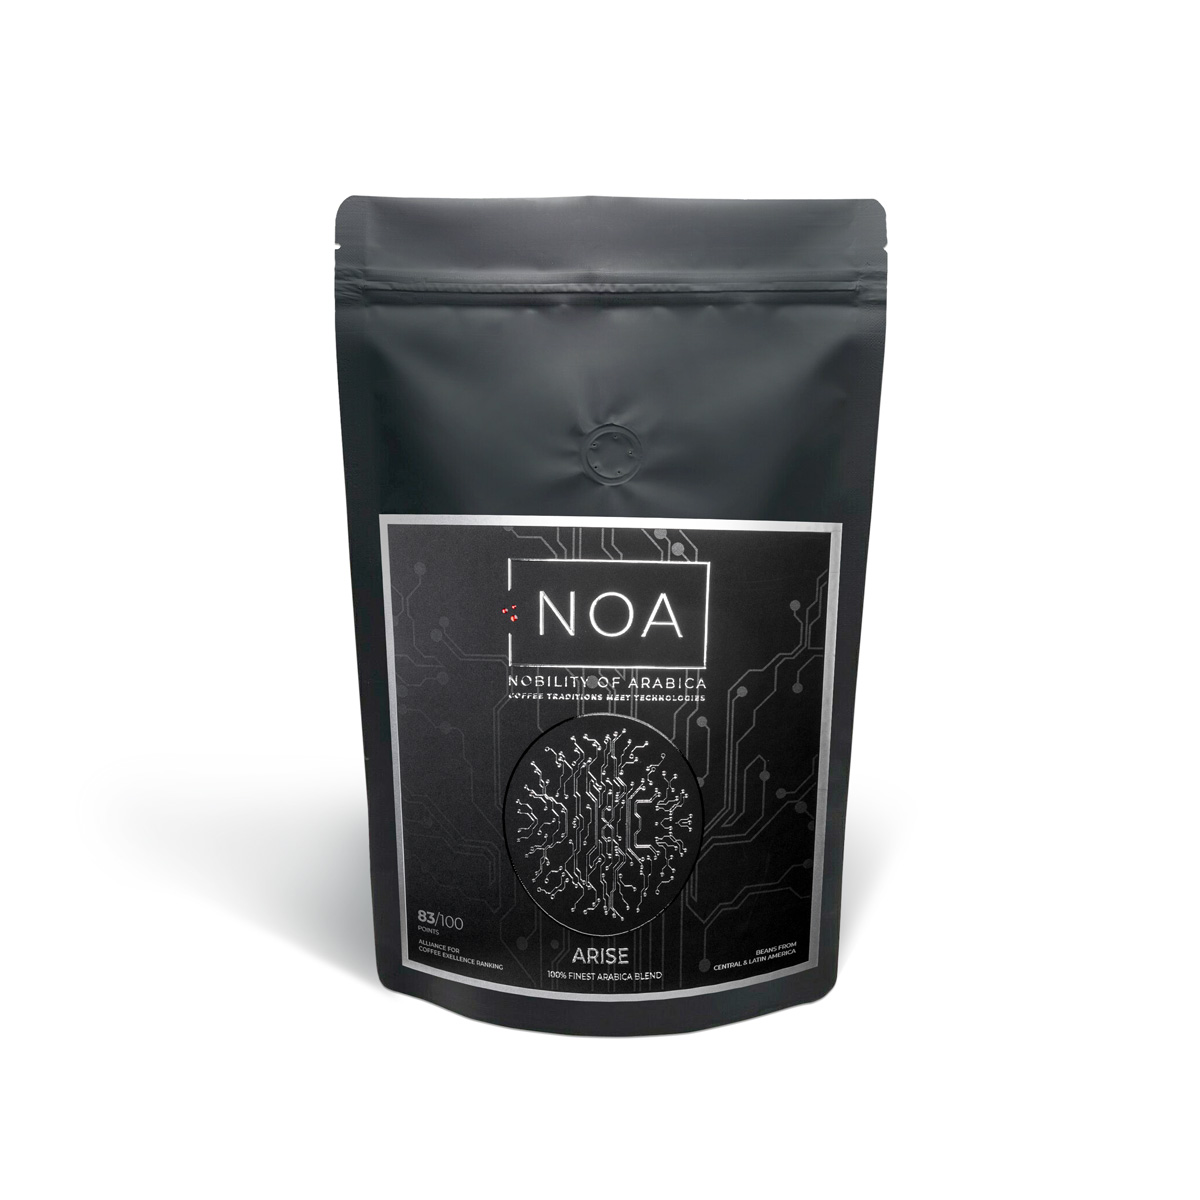 NOA Arise мляно кафе 200гр | Specialty Coffee | Coffee |